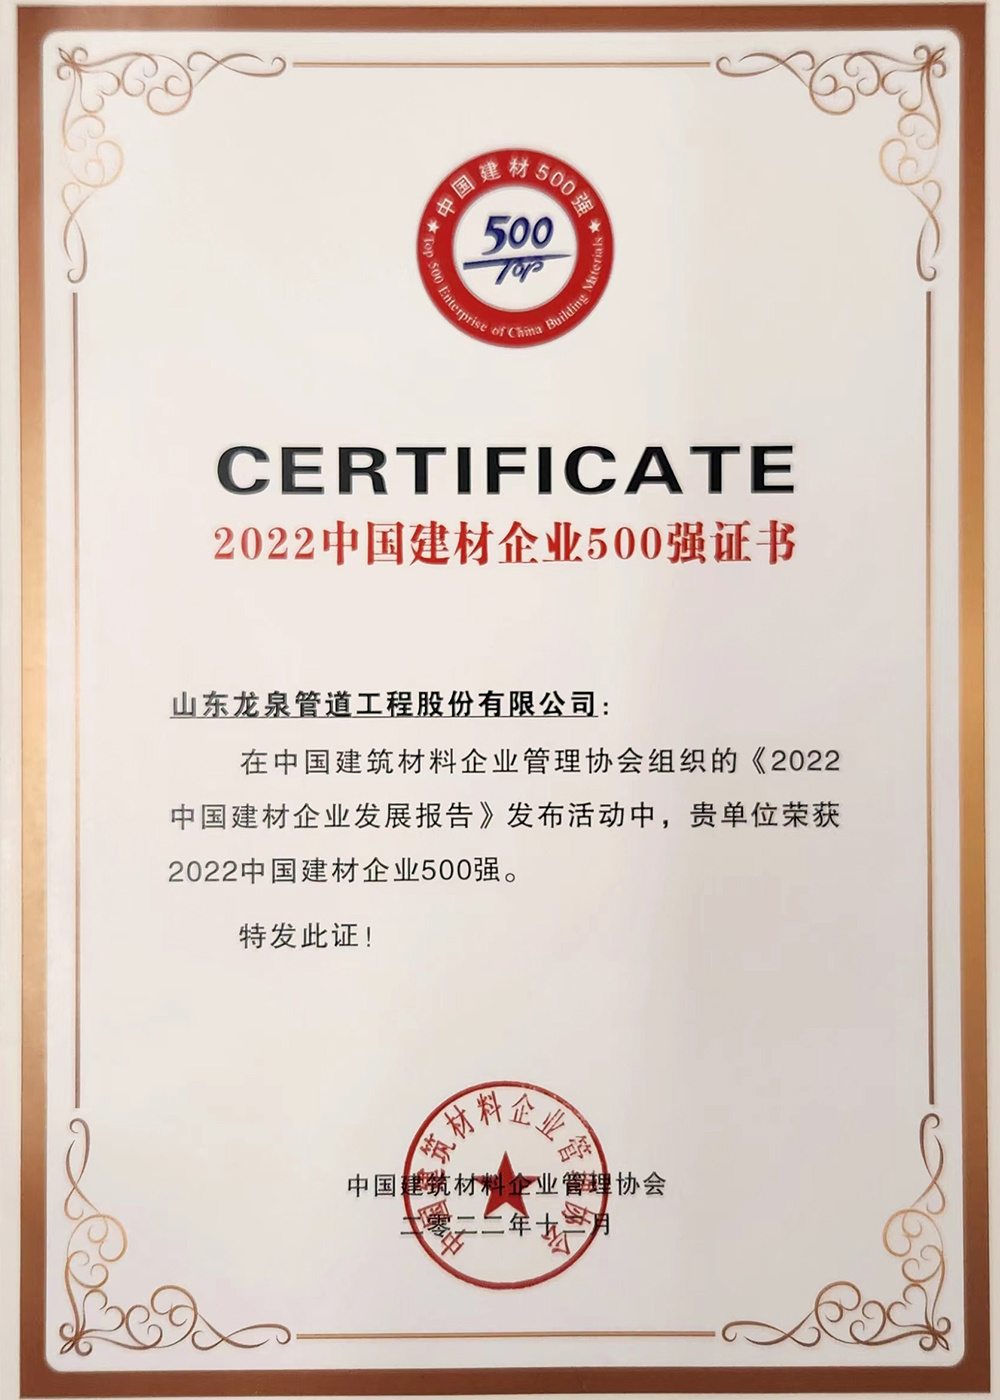 2022 China Building Materials Enterprise Top 500 Certificate